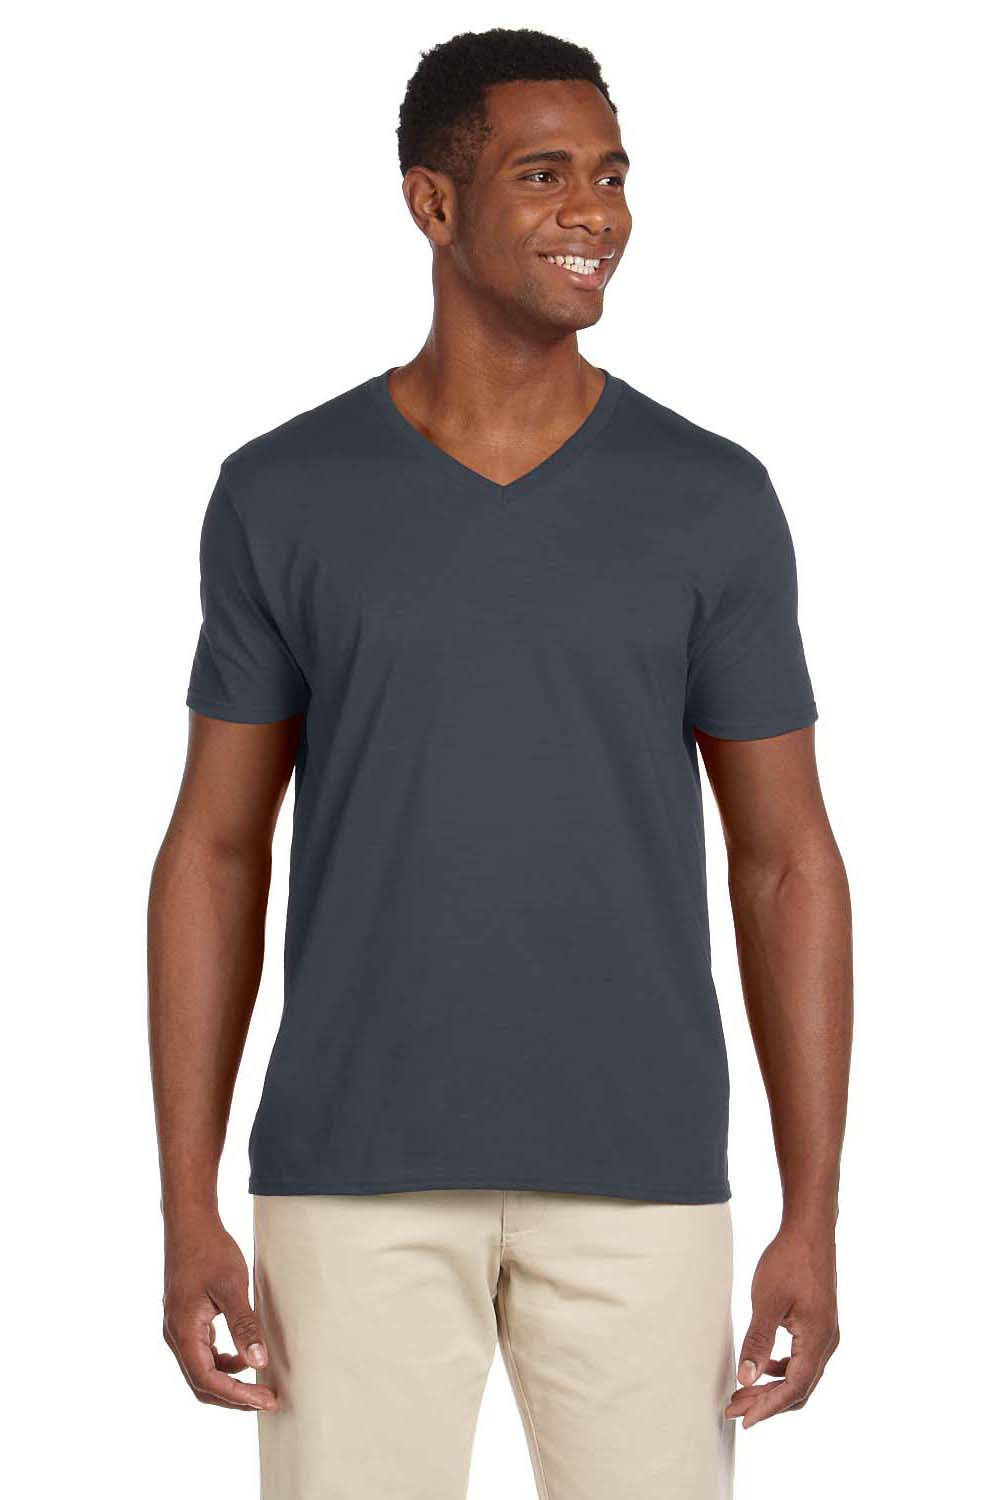 Gildan G64V Mens Softstyle Short Sleeve V-Neck T-Shirt Charcoal Grey Front